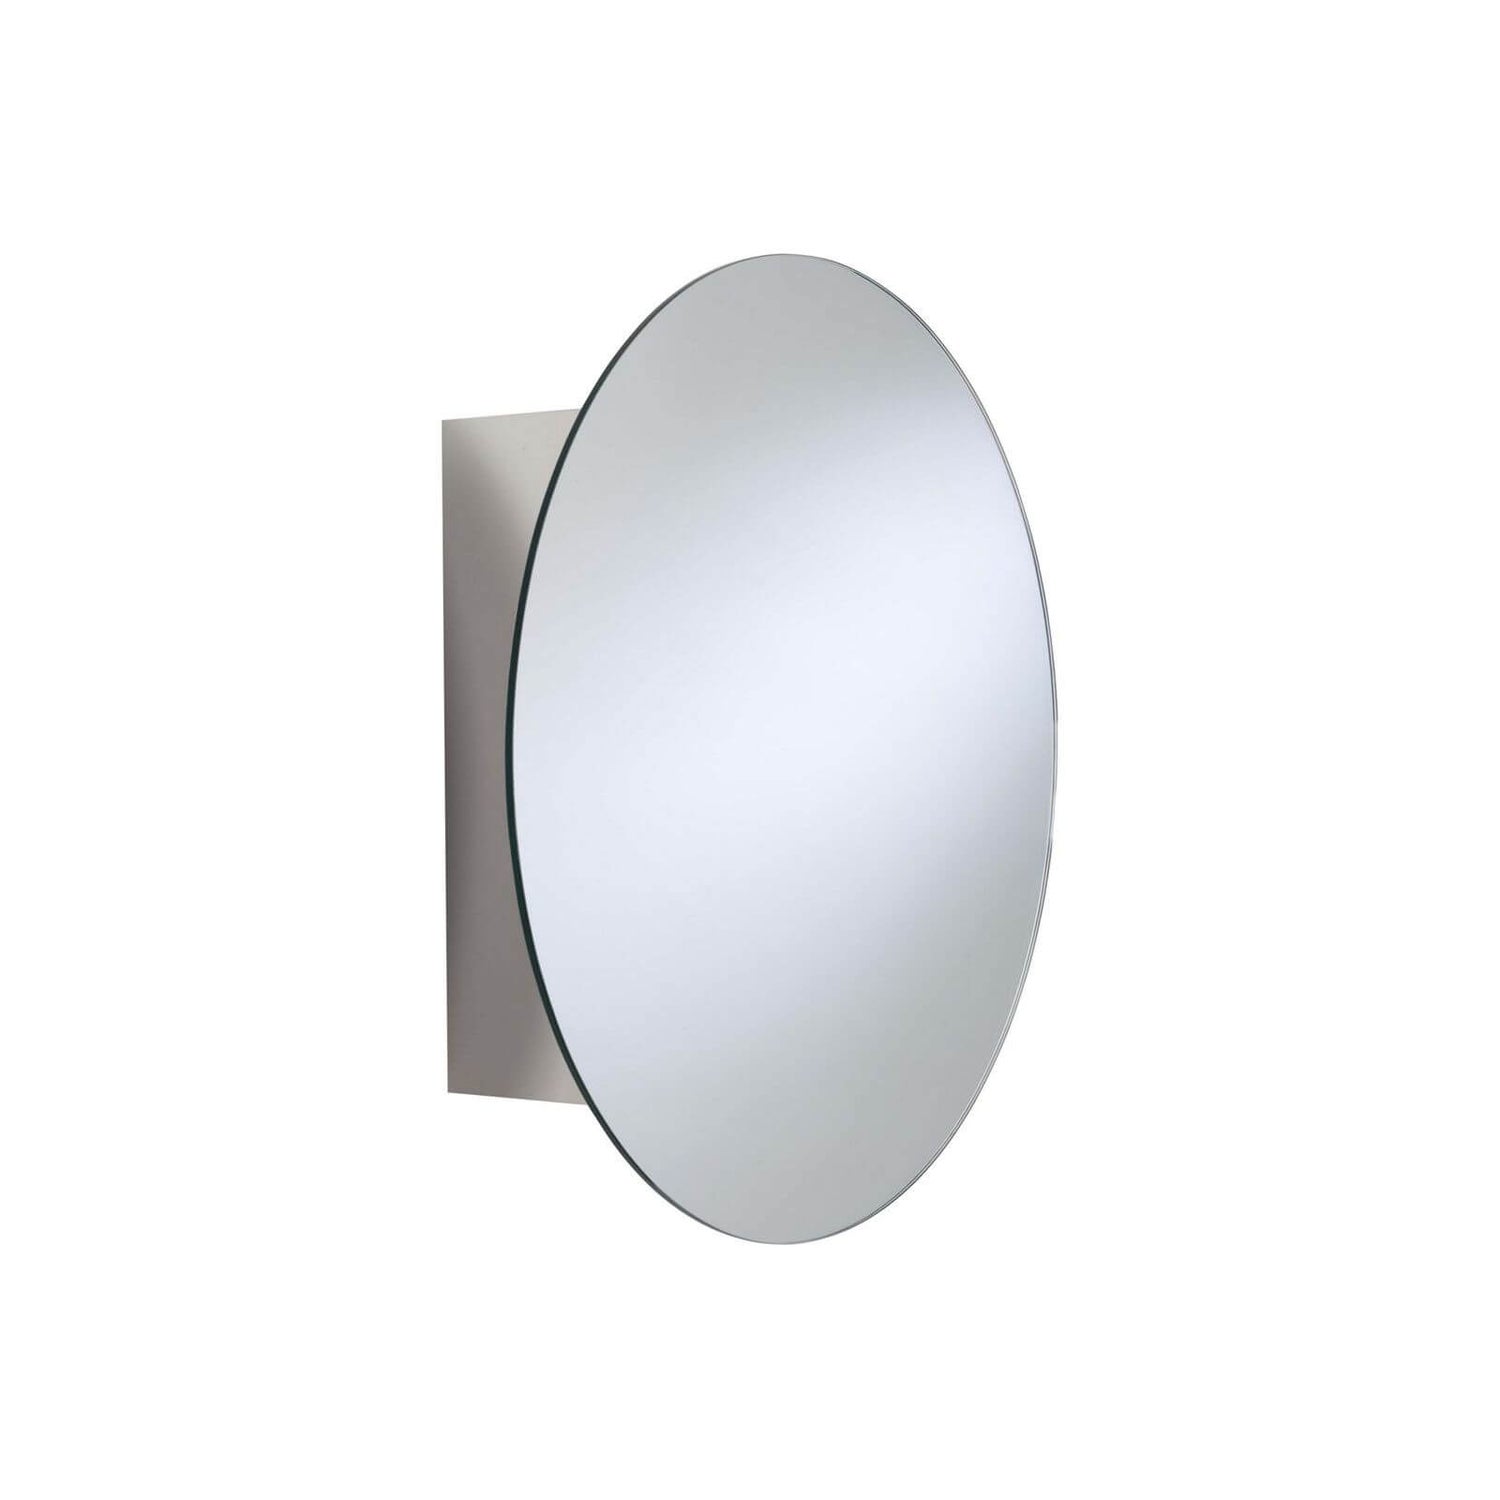 Croydex Missouri Round Mirror Door, Bathroom Cabinet With Circular Mirror